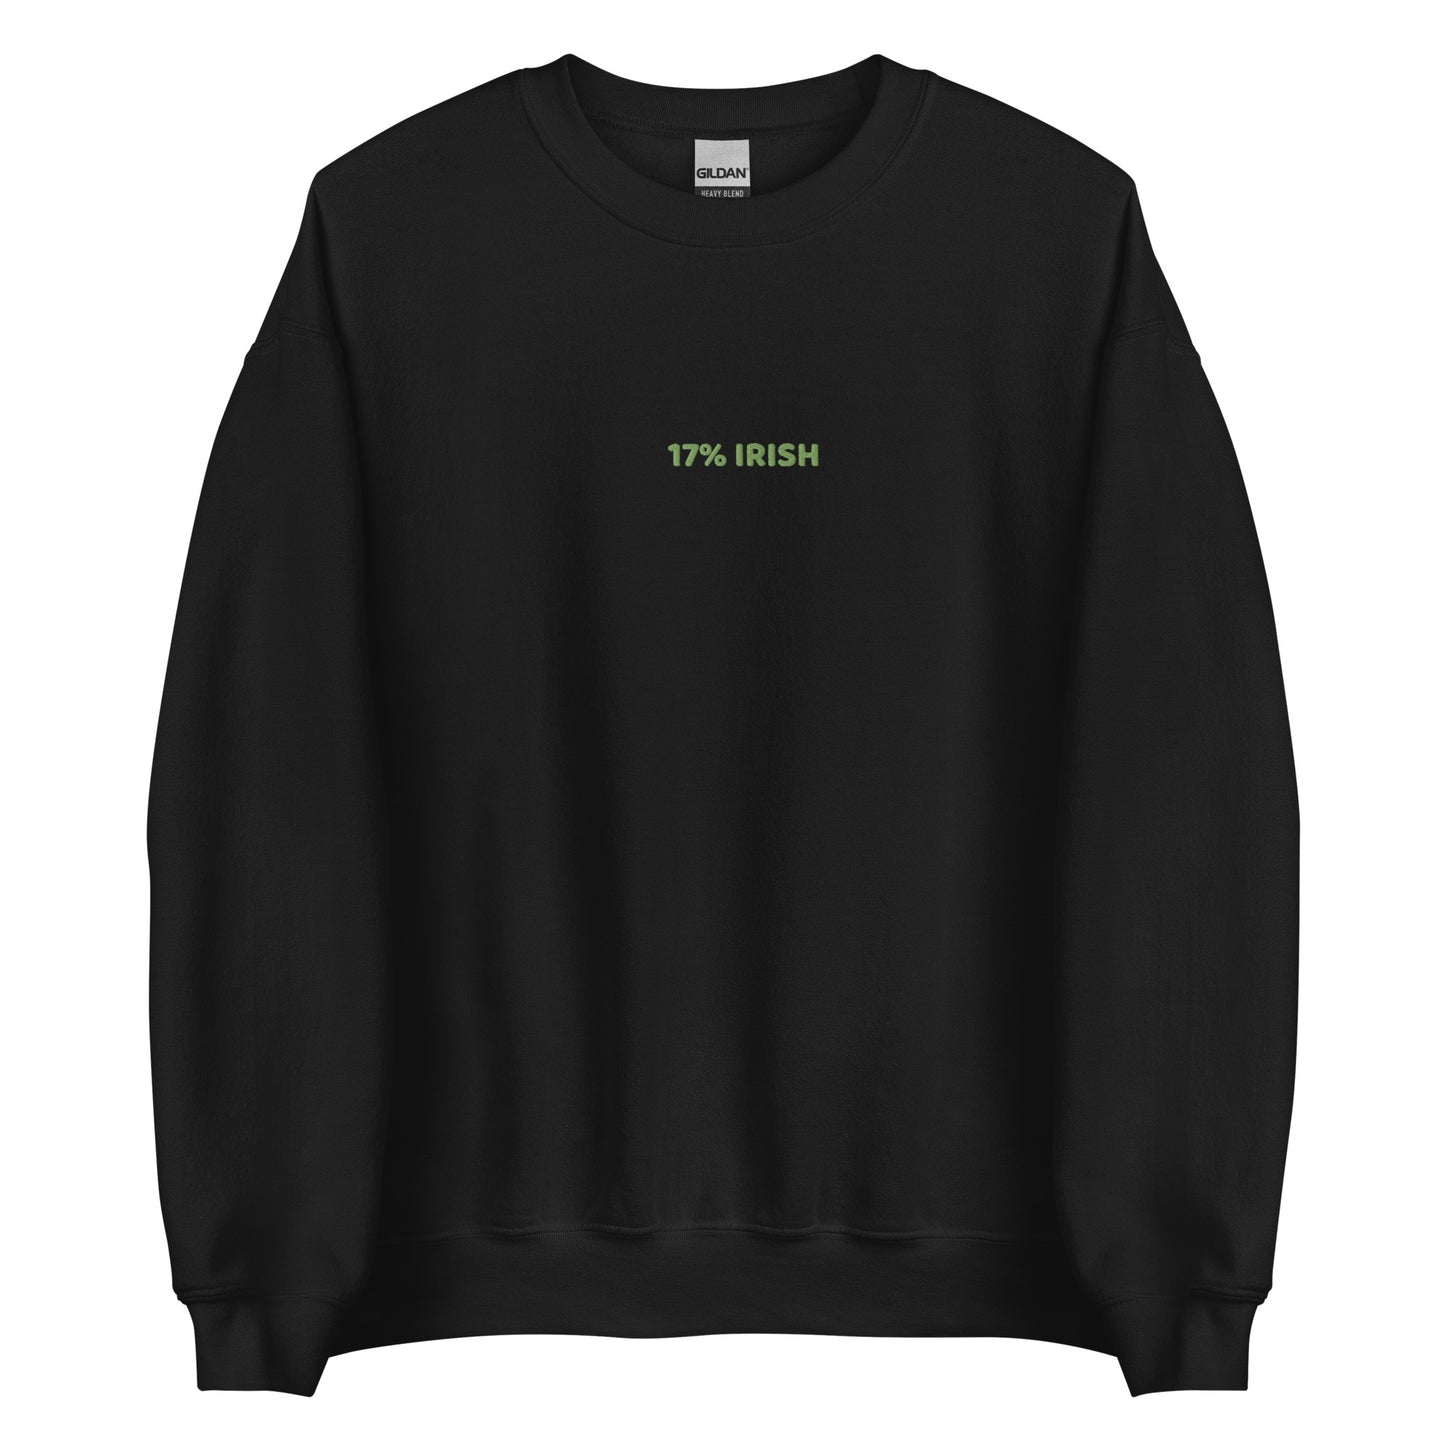 17% Irish Embroidered Crewneck Sweatshirt